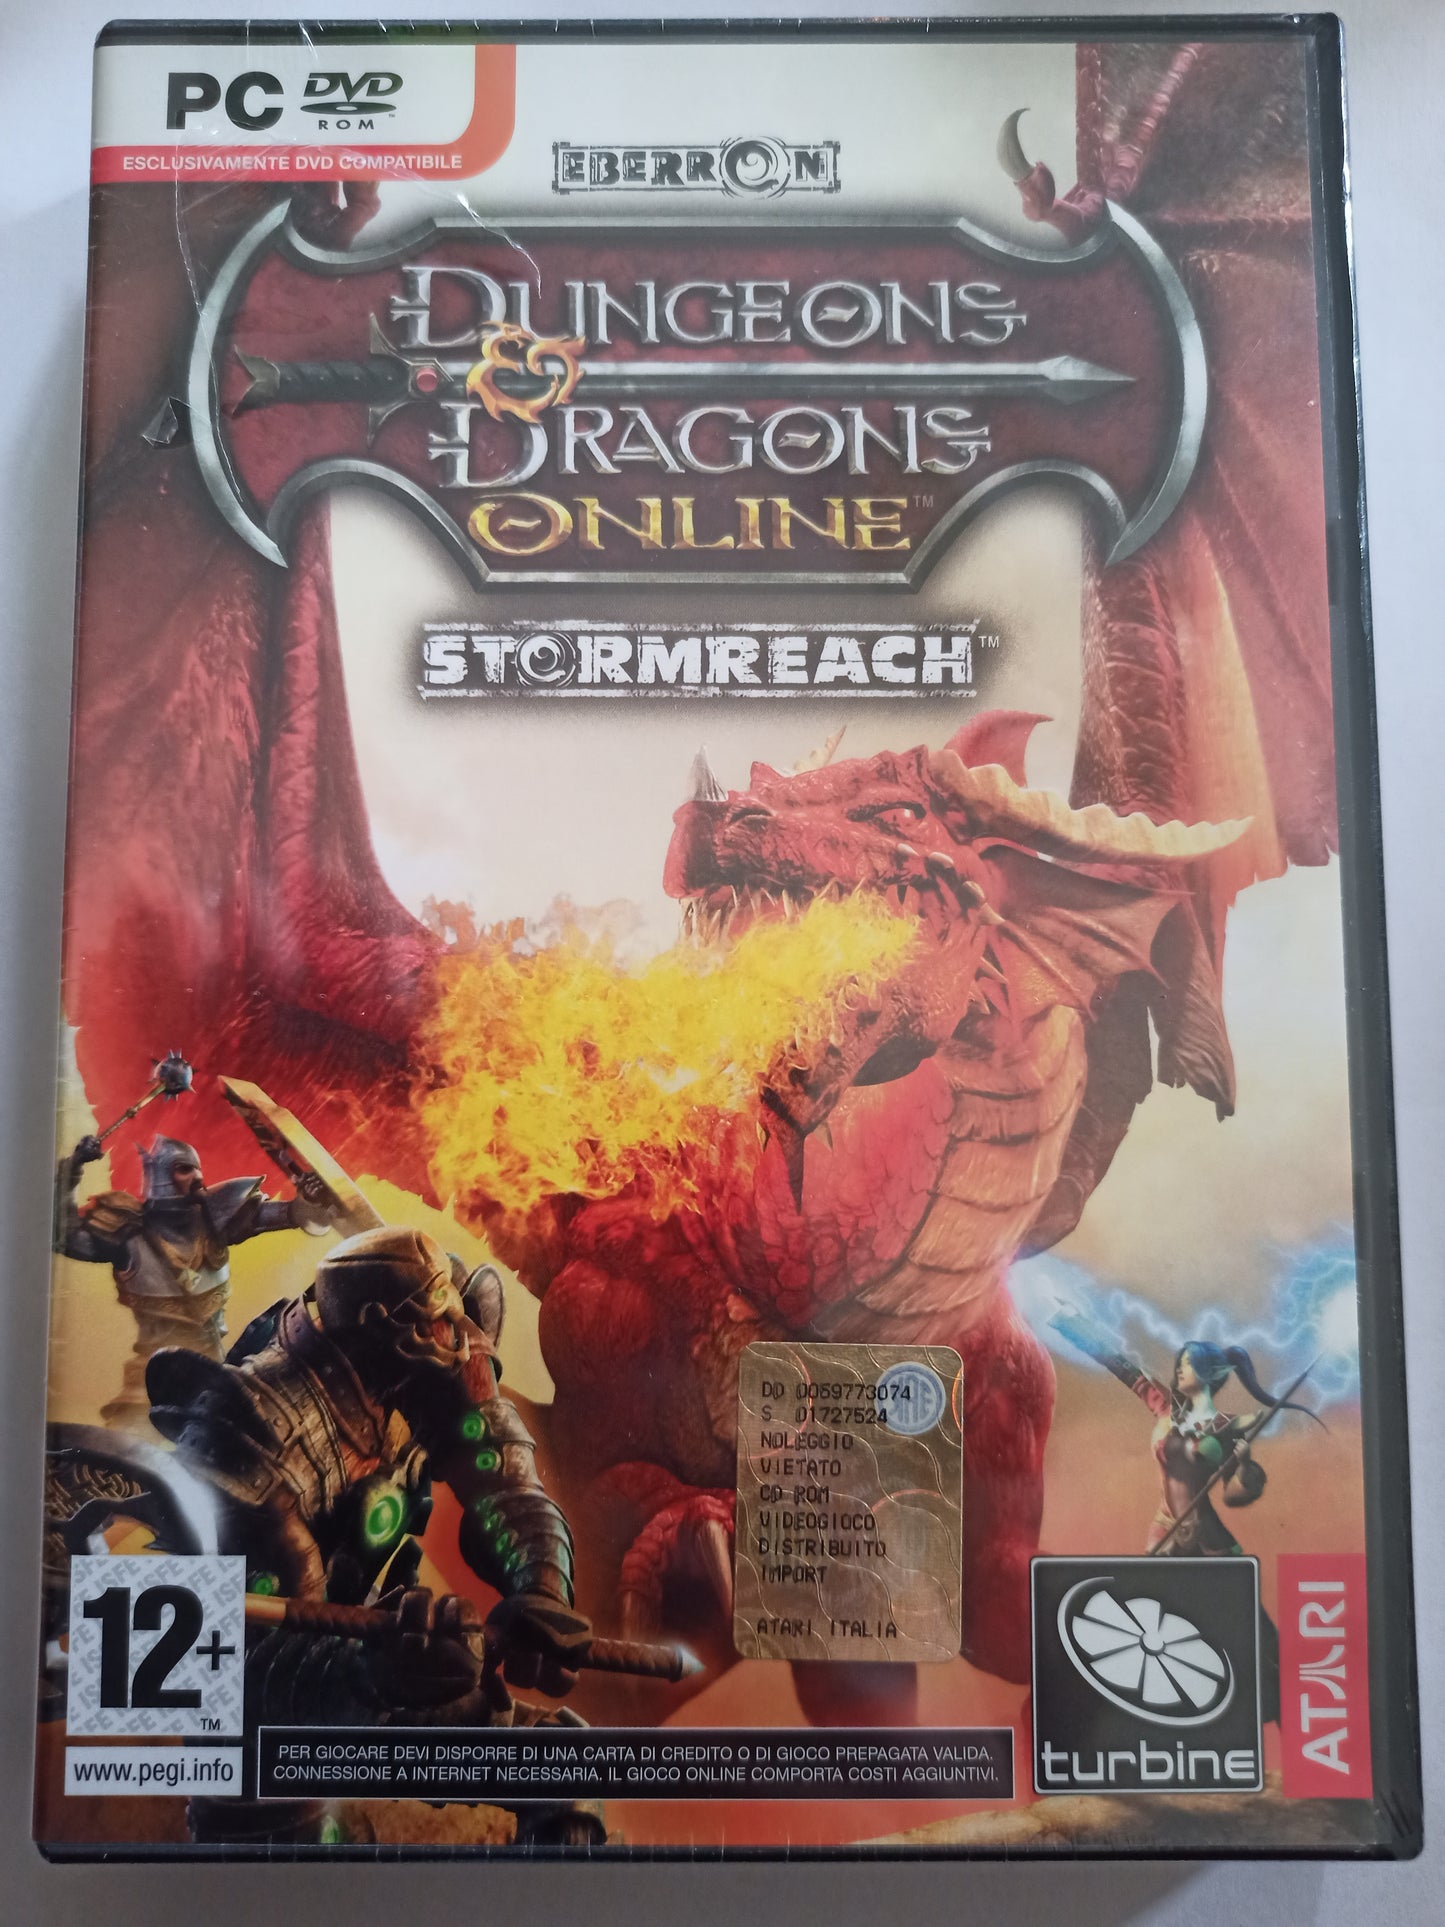 Videogioco PC Dungeons & Dragons Online Stormreach, Sigillato